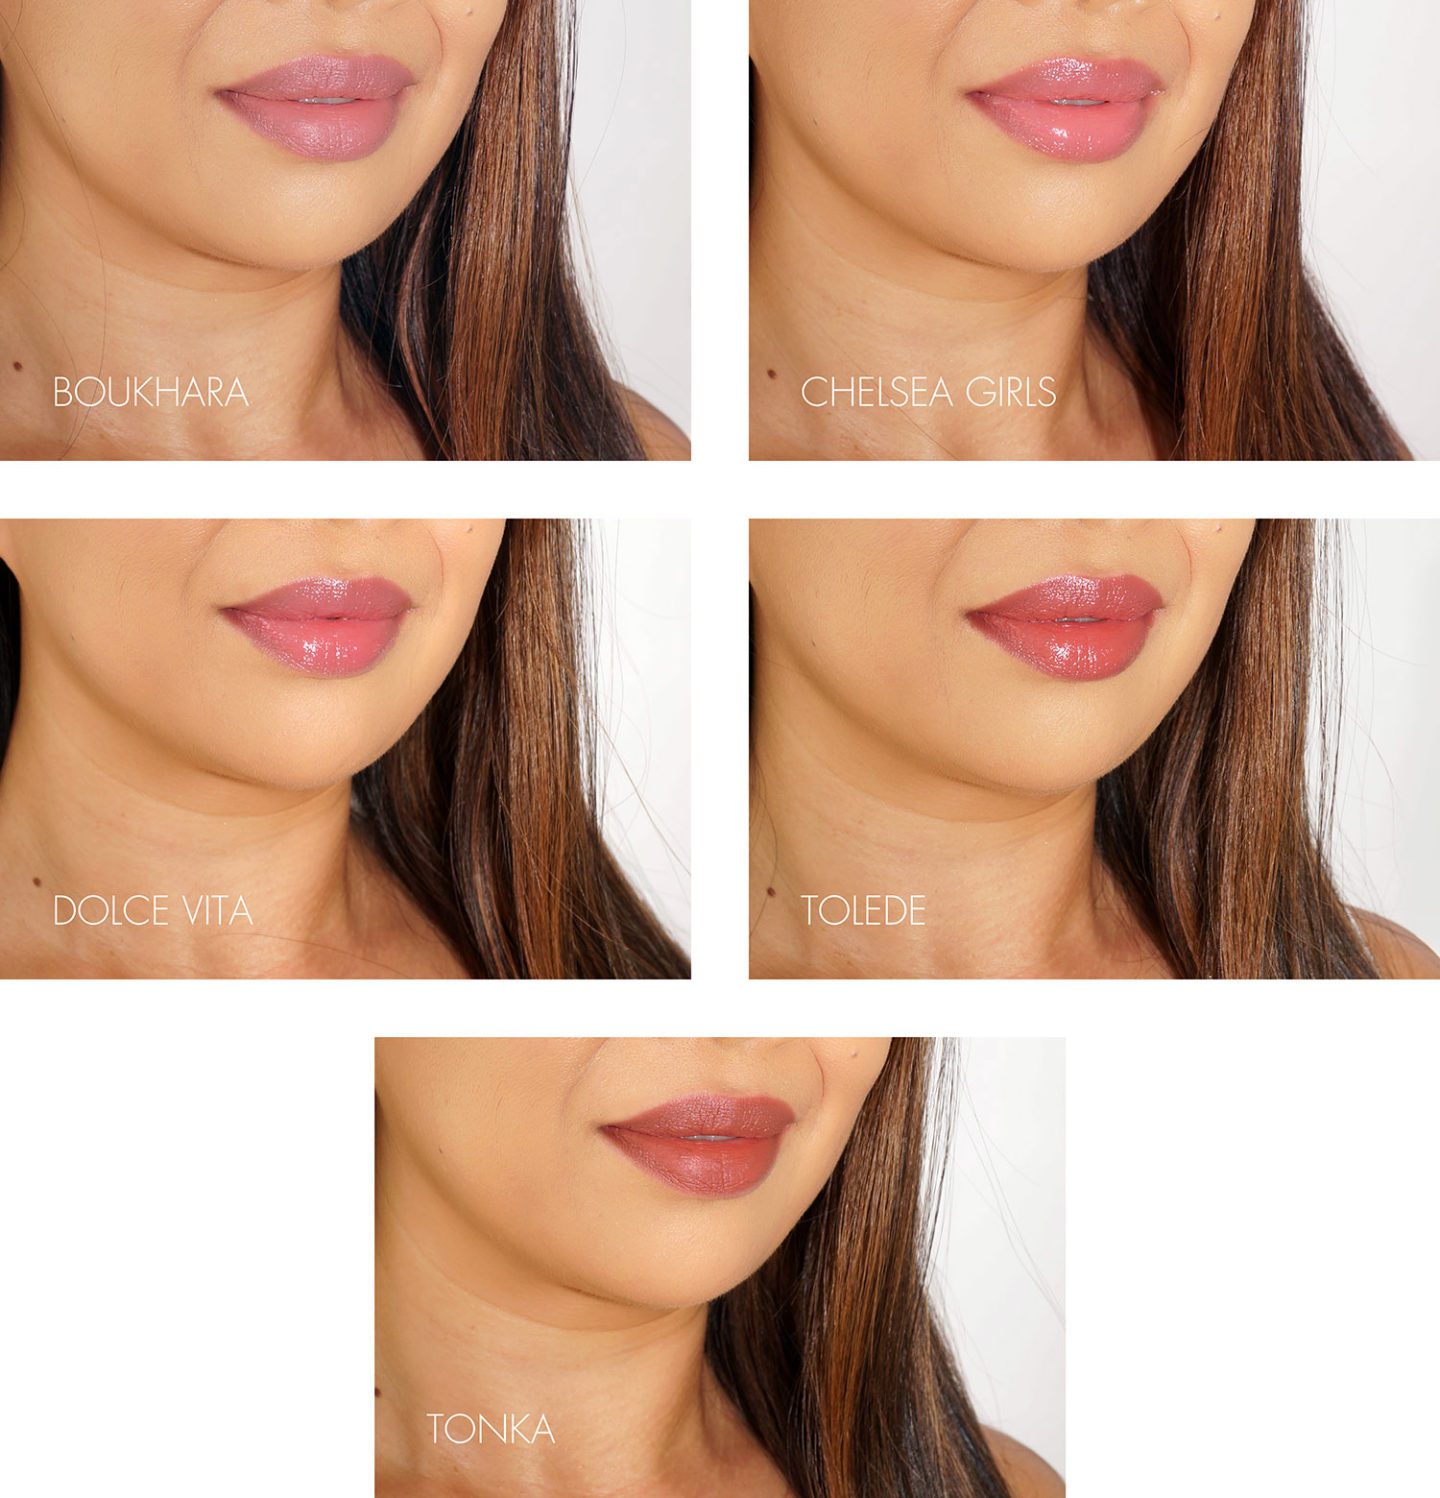 NARS Lipstick Lip Swatches: Boukhara, Chelsea Girls, Dolce Vita, Tolede and Tonka